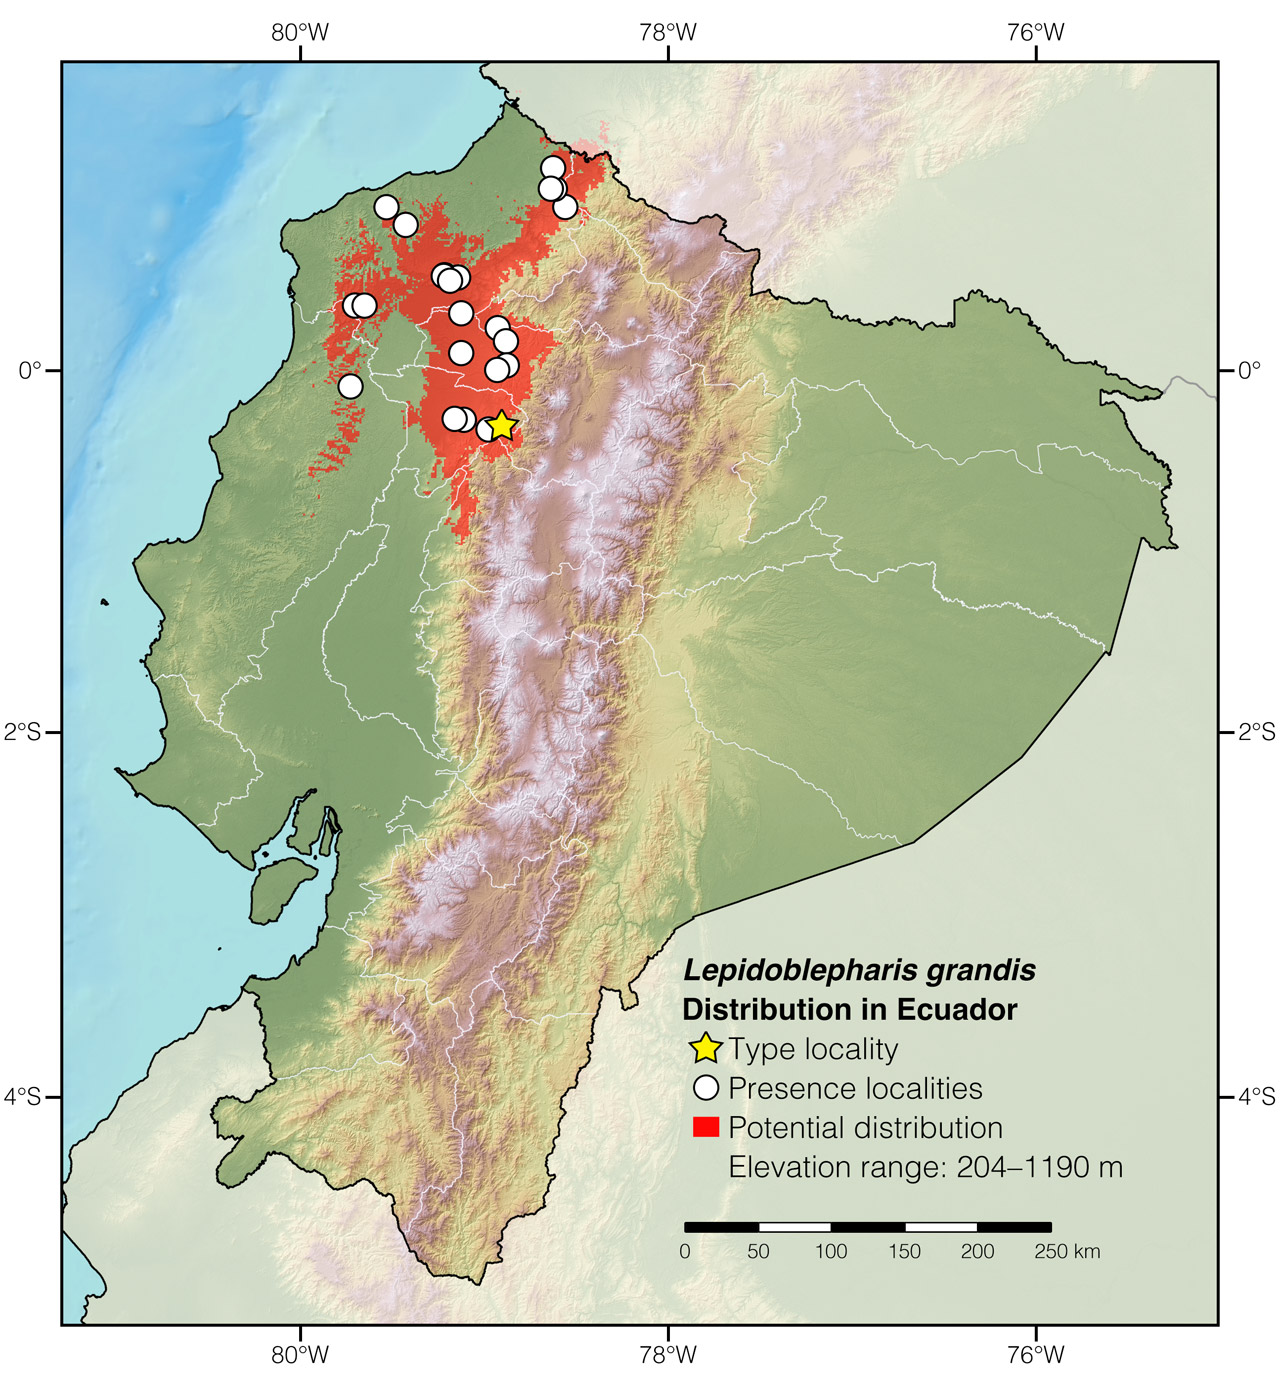 Distribution of Lepidoblepharis grandis in Ecuador